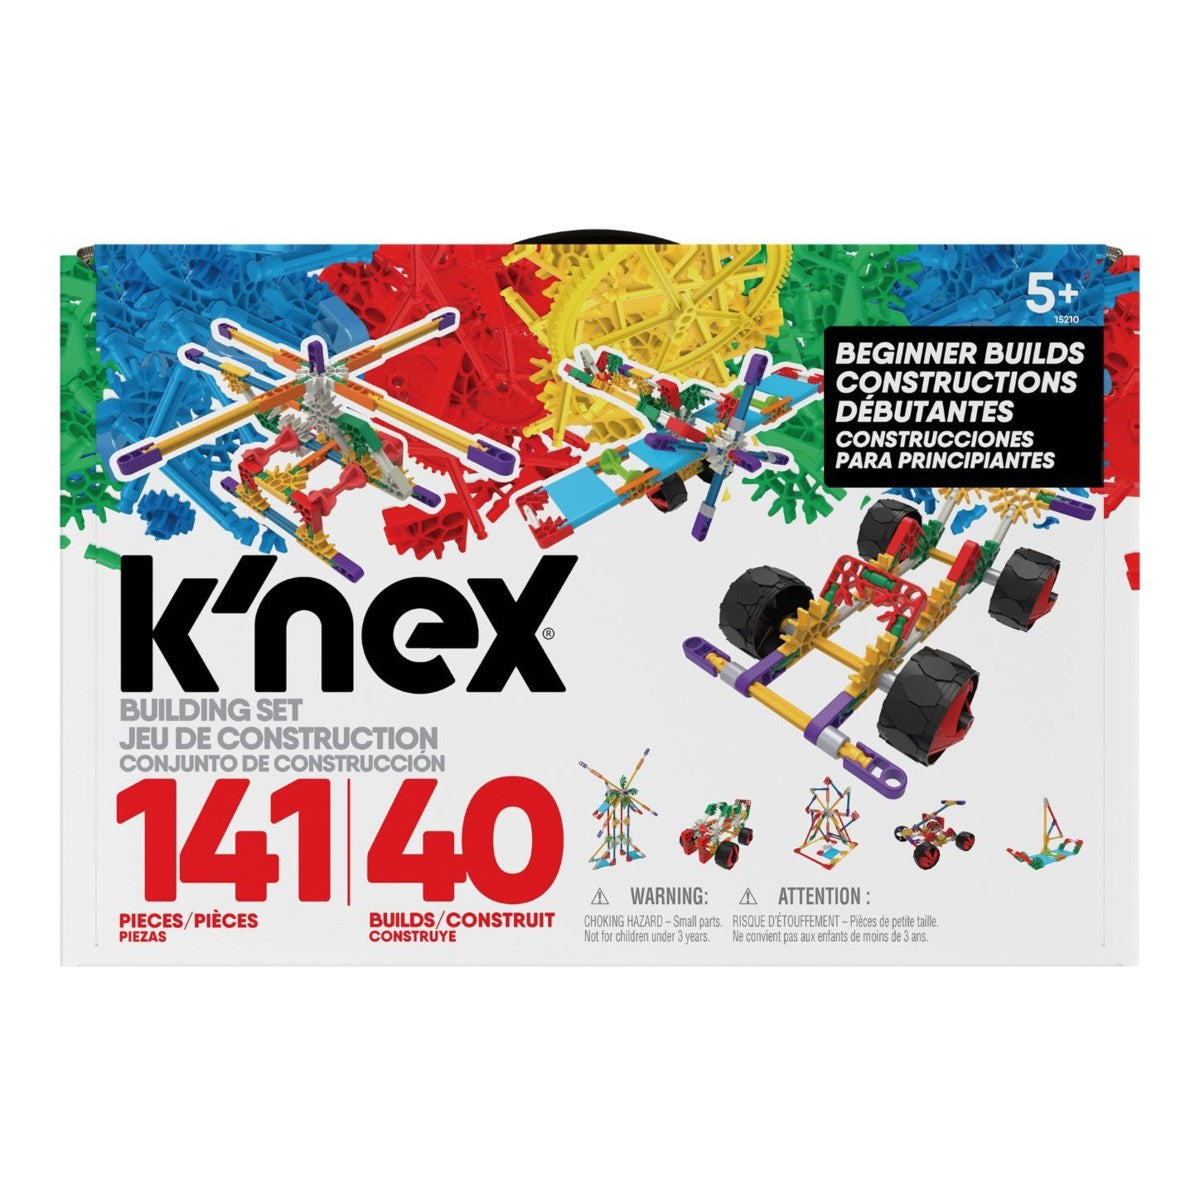 Knex 建筑套装 40 模型 - 141 件